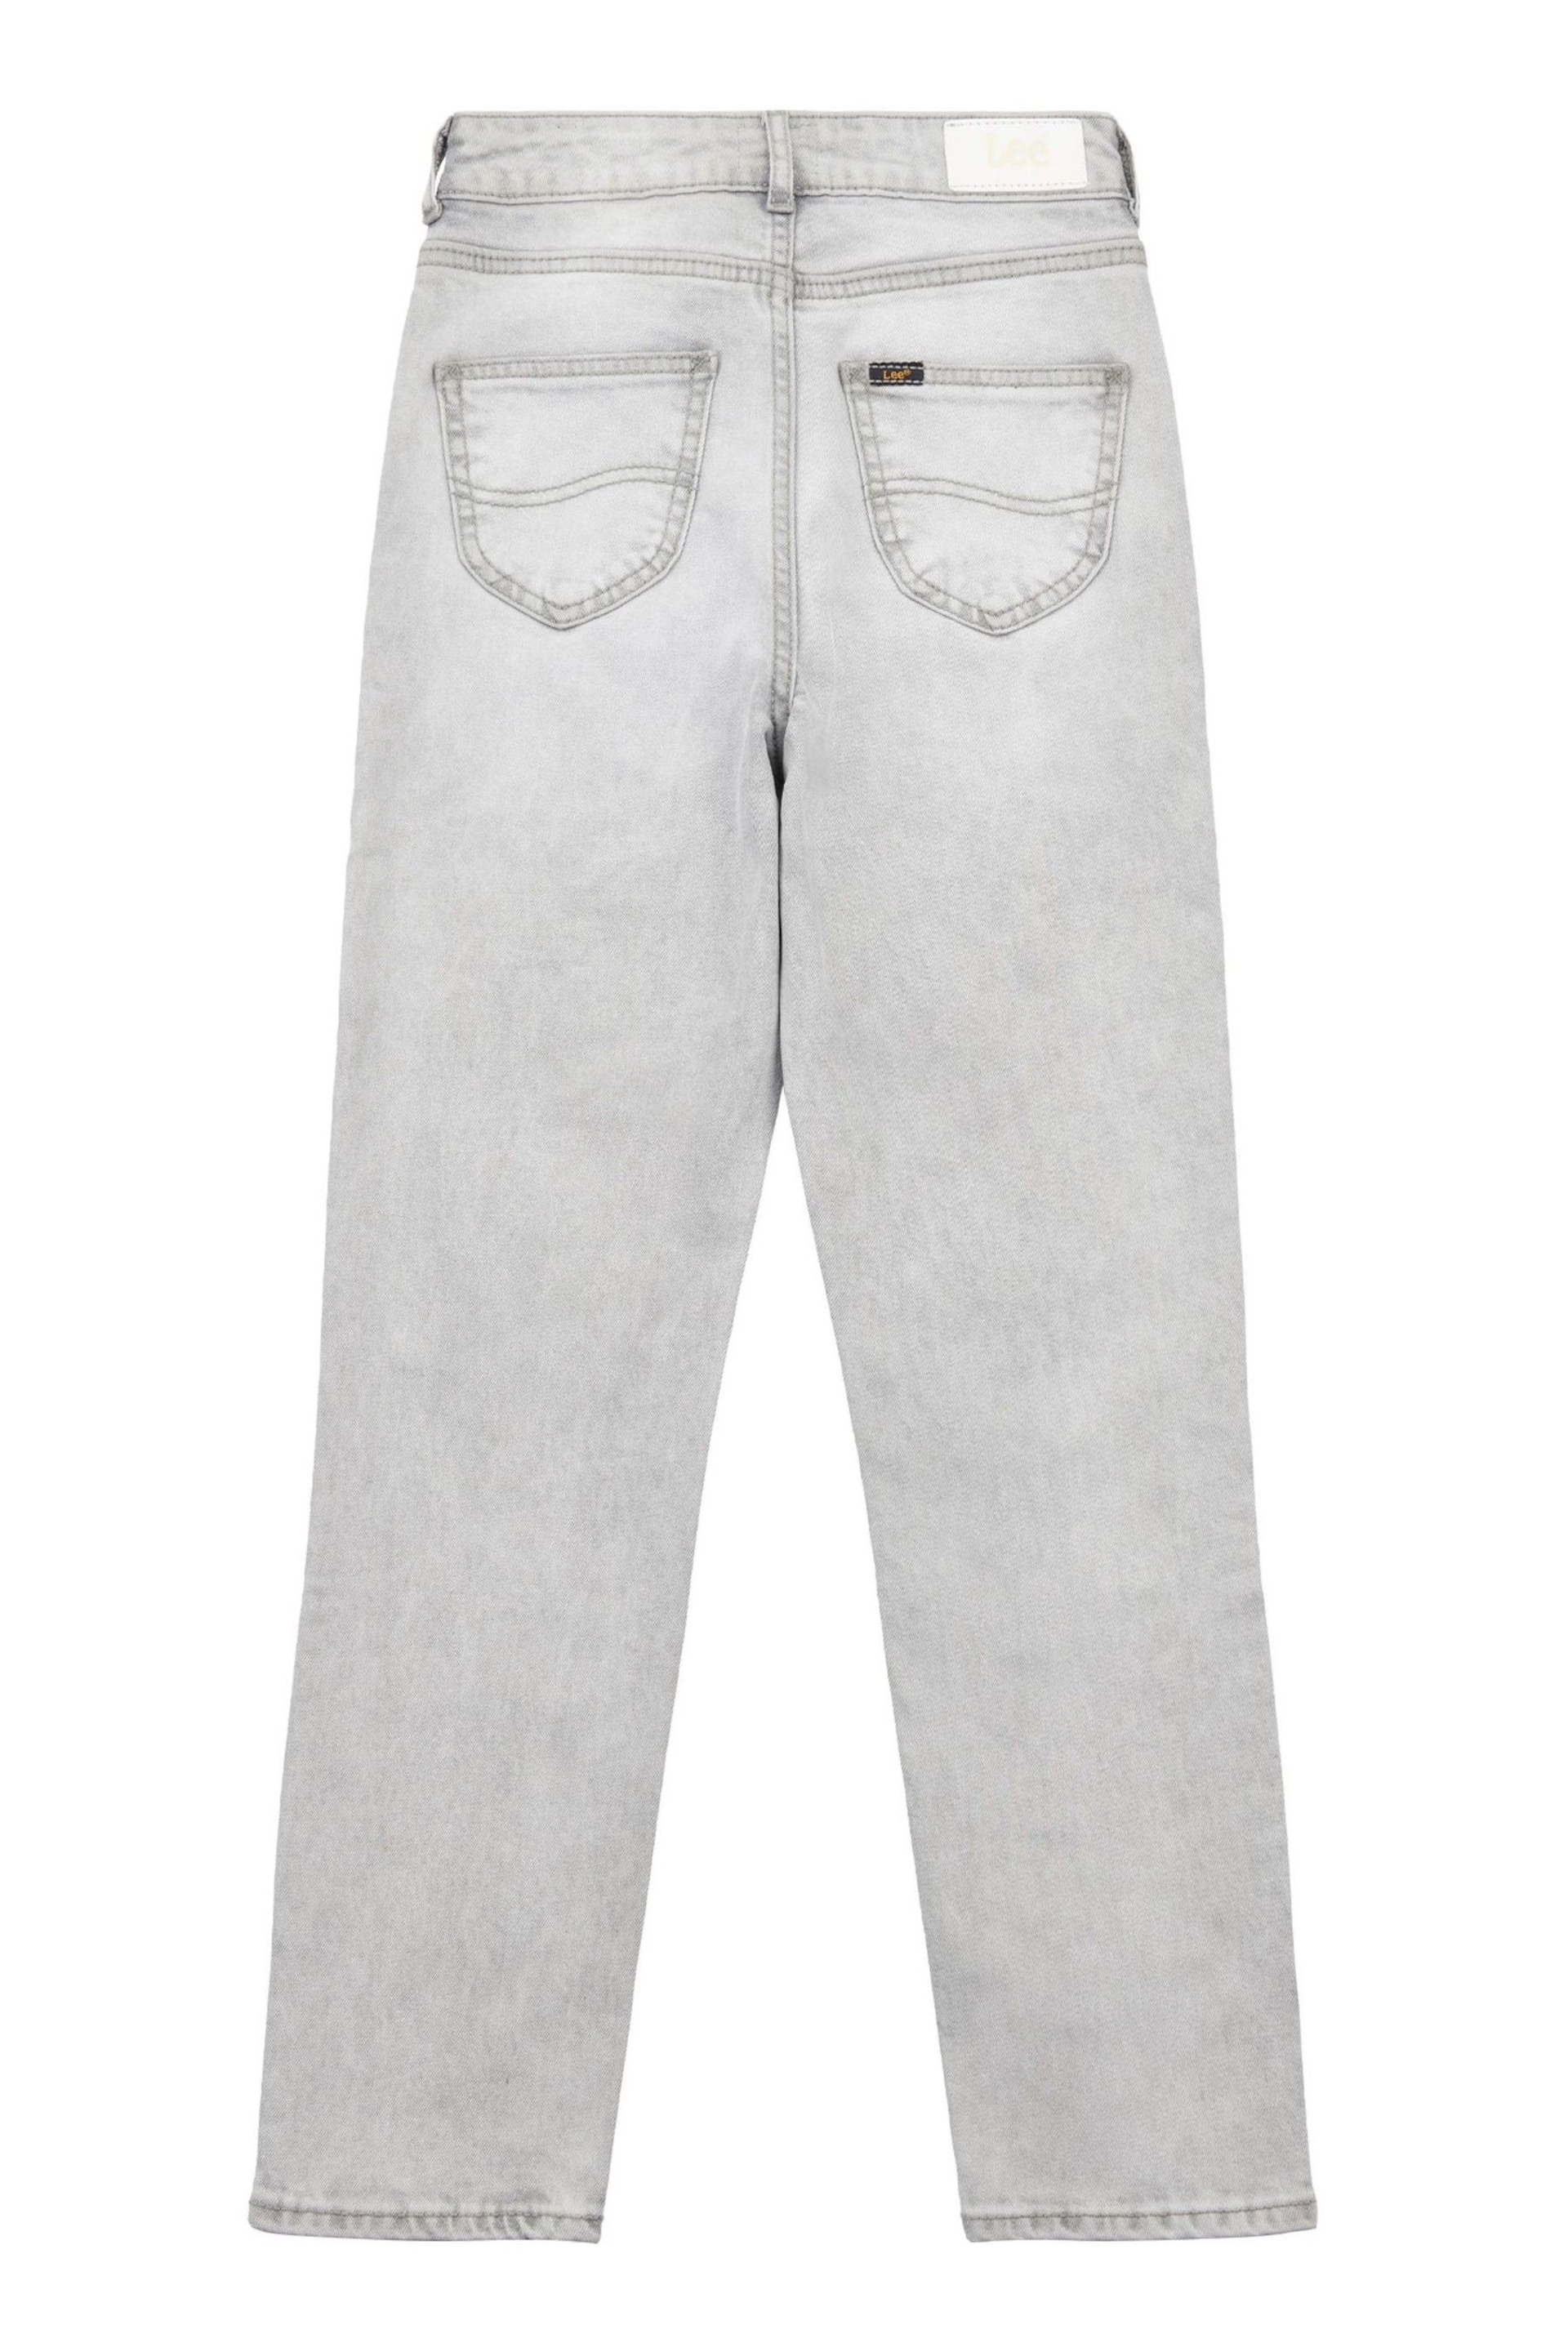 Lee Girls Grey Stella Jeans - Image 2 of 4